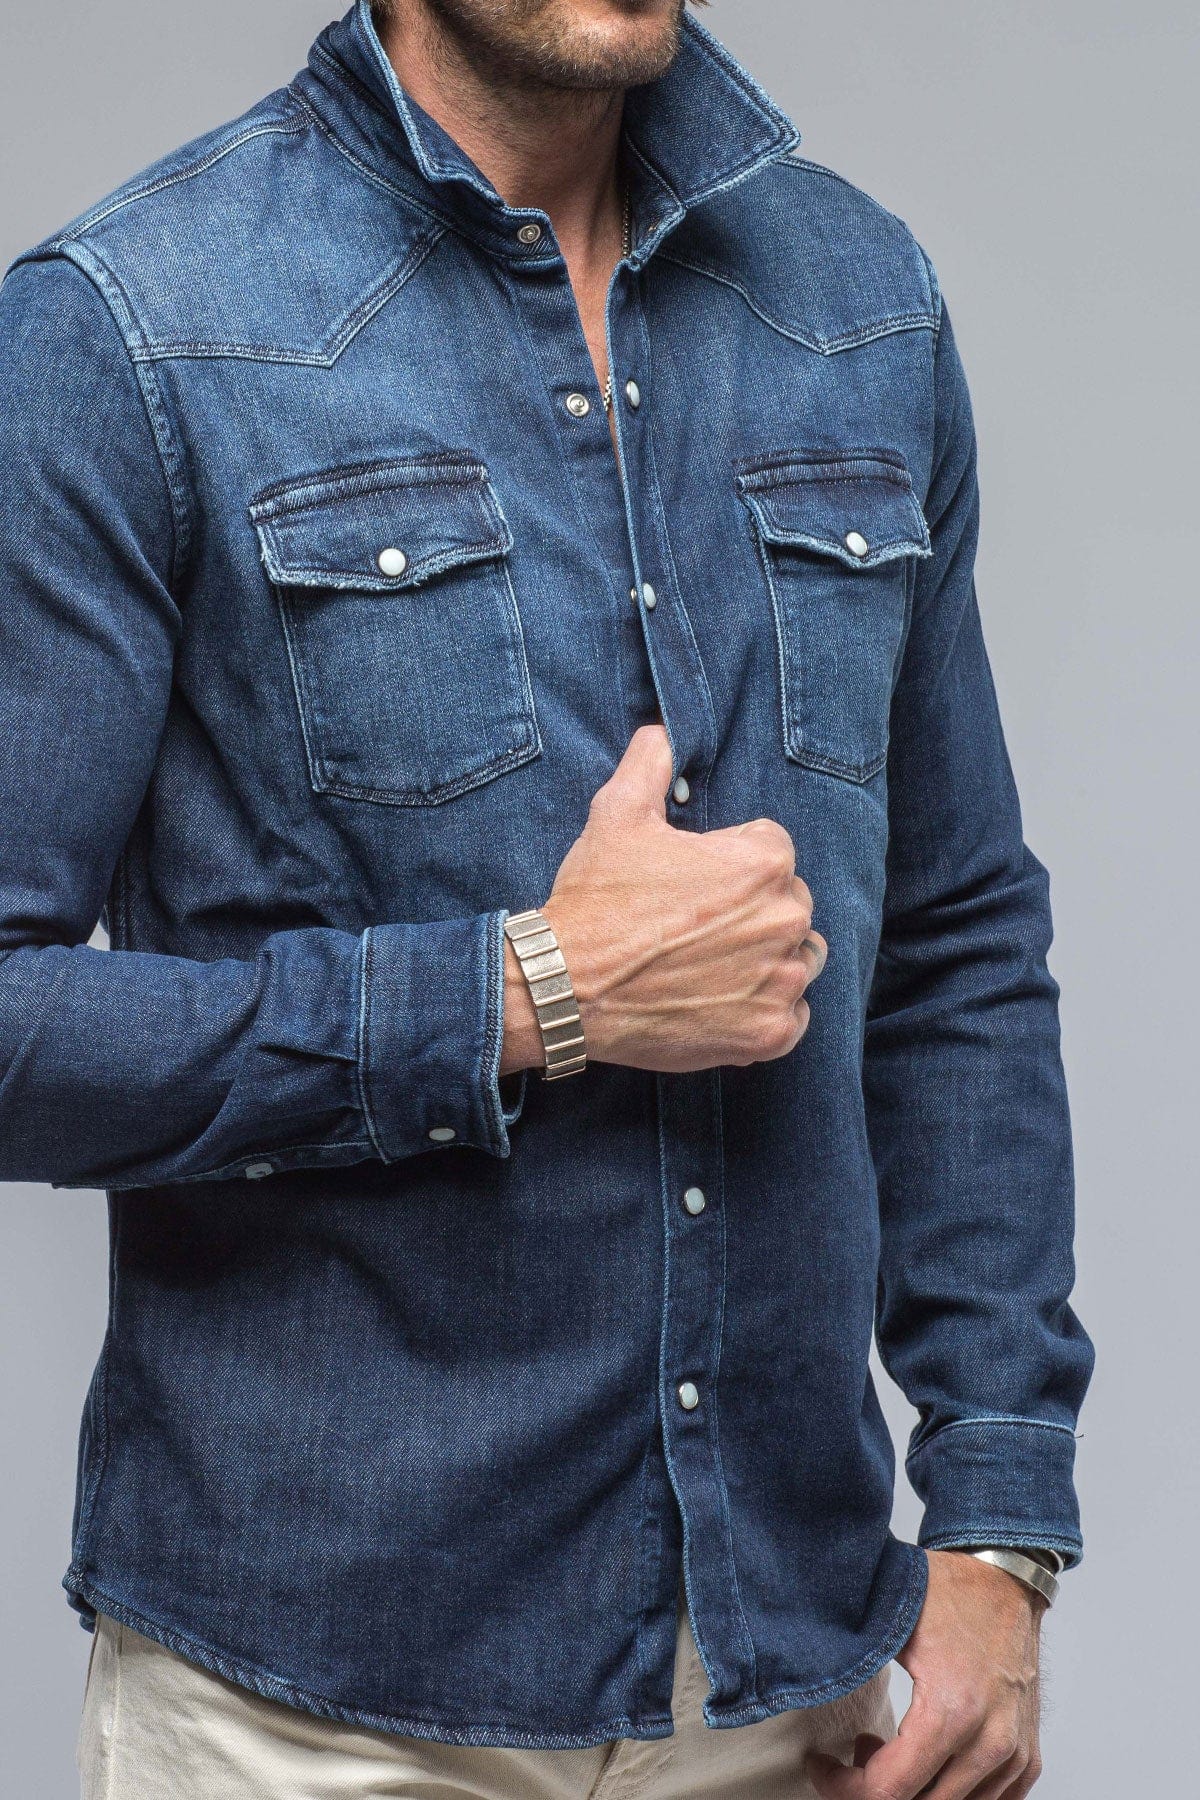 ASOS DESIGN skinny fit western denim shirt in light wash blue | ASOS